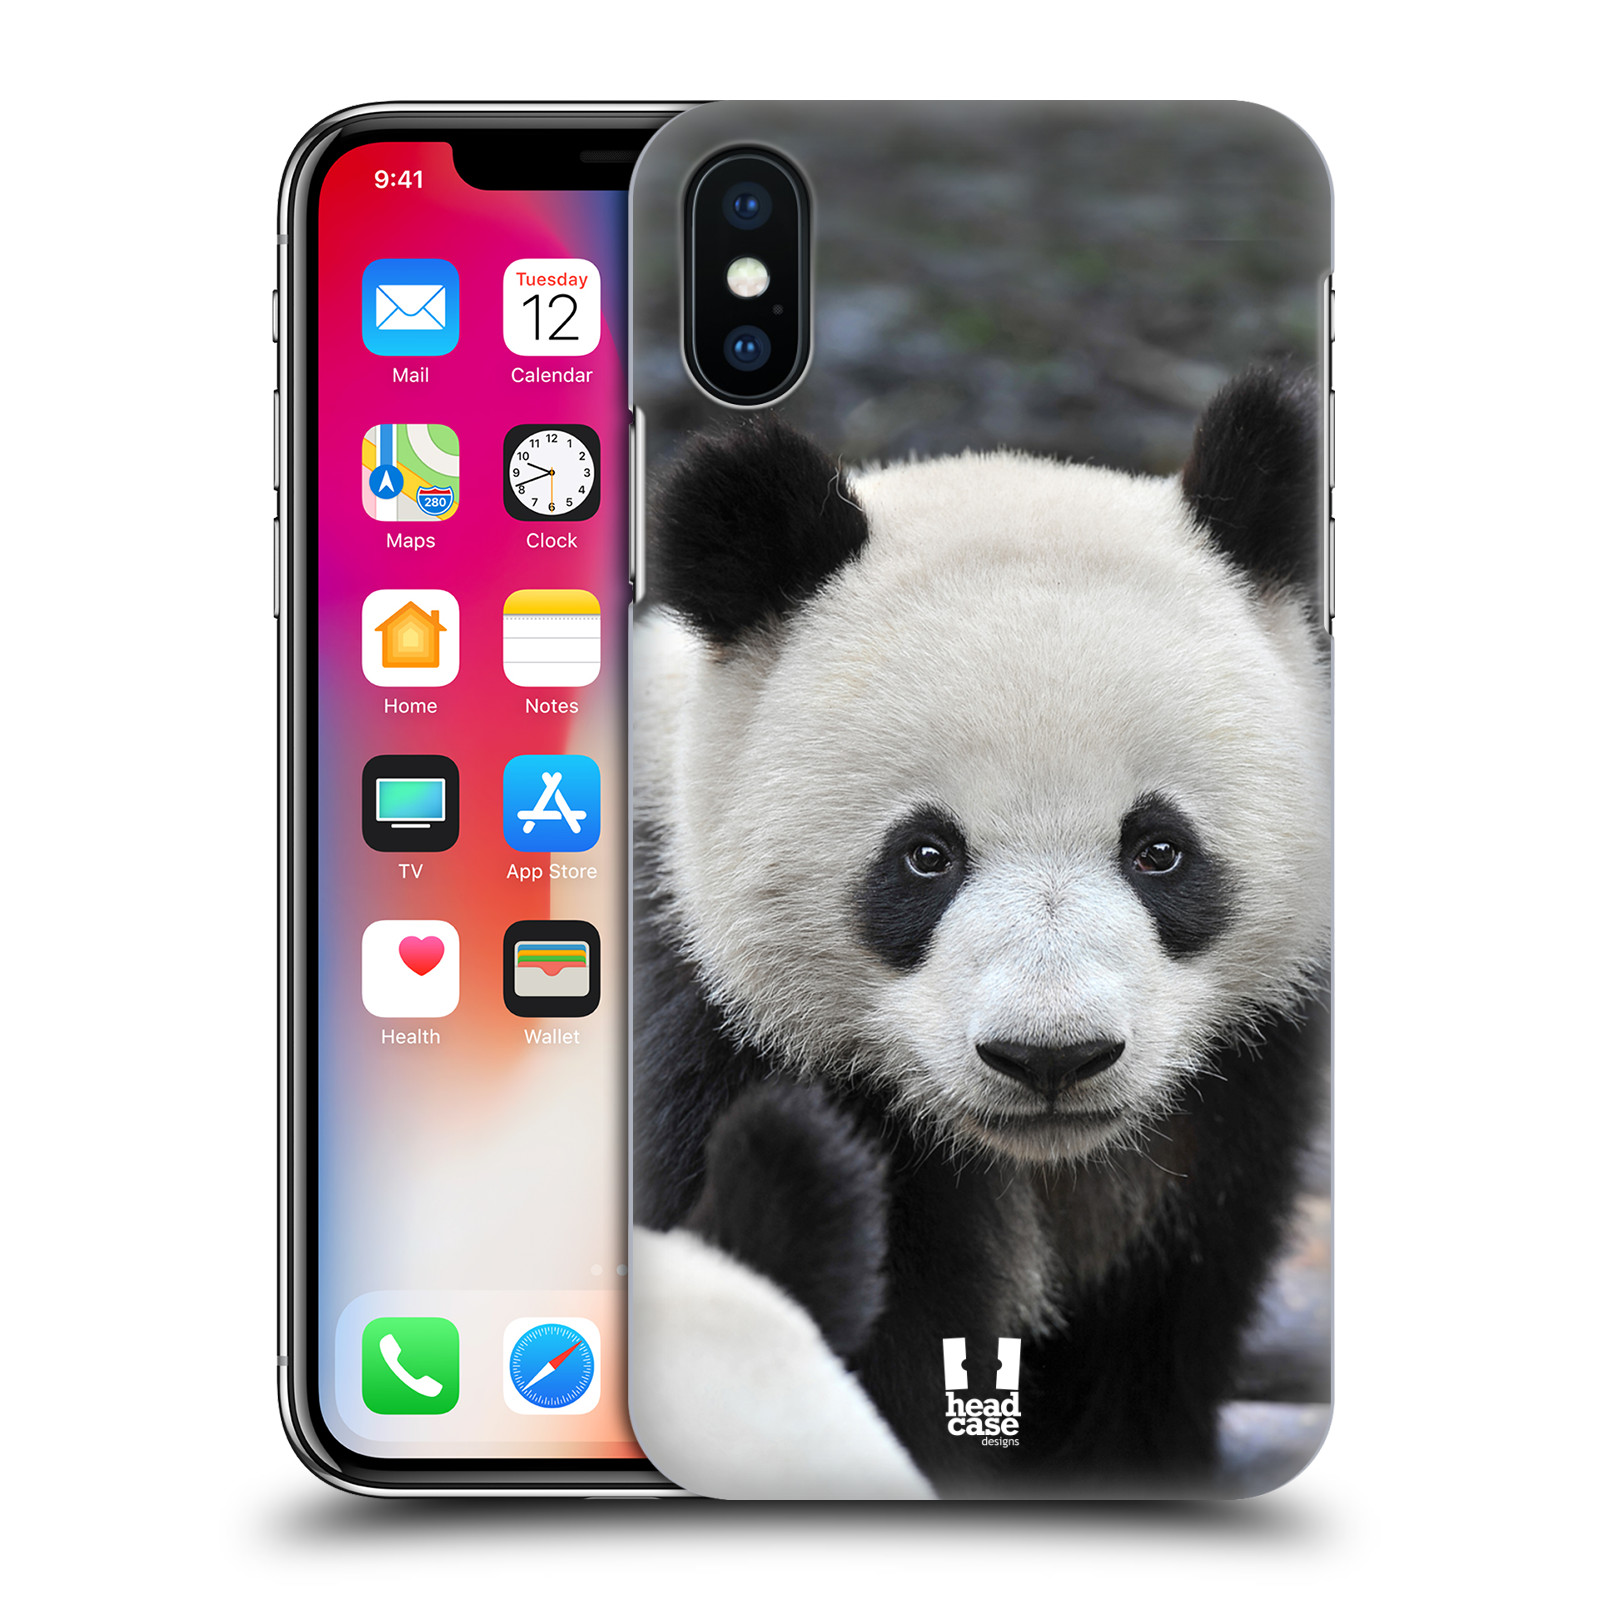 HEAD CASE plastový obal na mobil Apple Iphone X / XS vzor Divočina, Divoký život a zvířata foto MEDVĚD PANDA